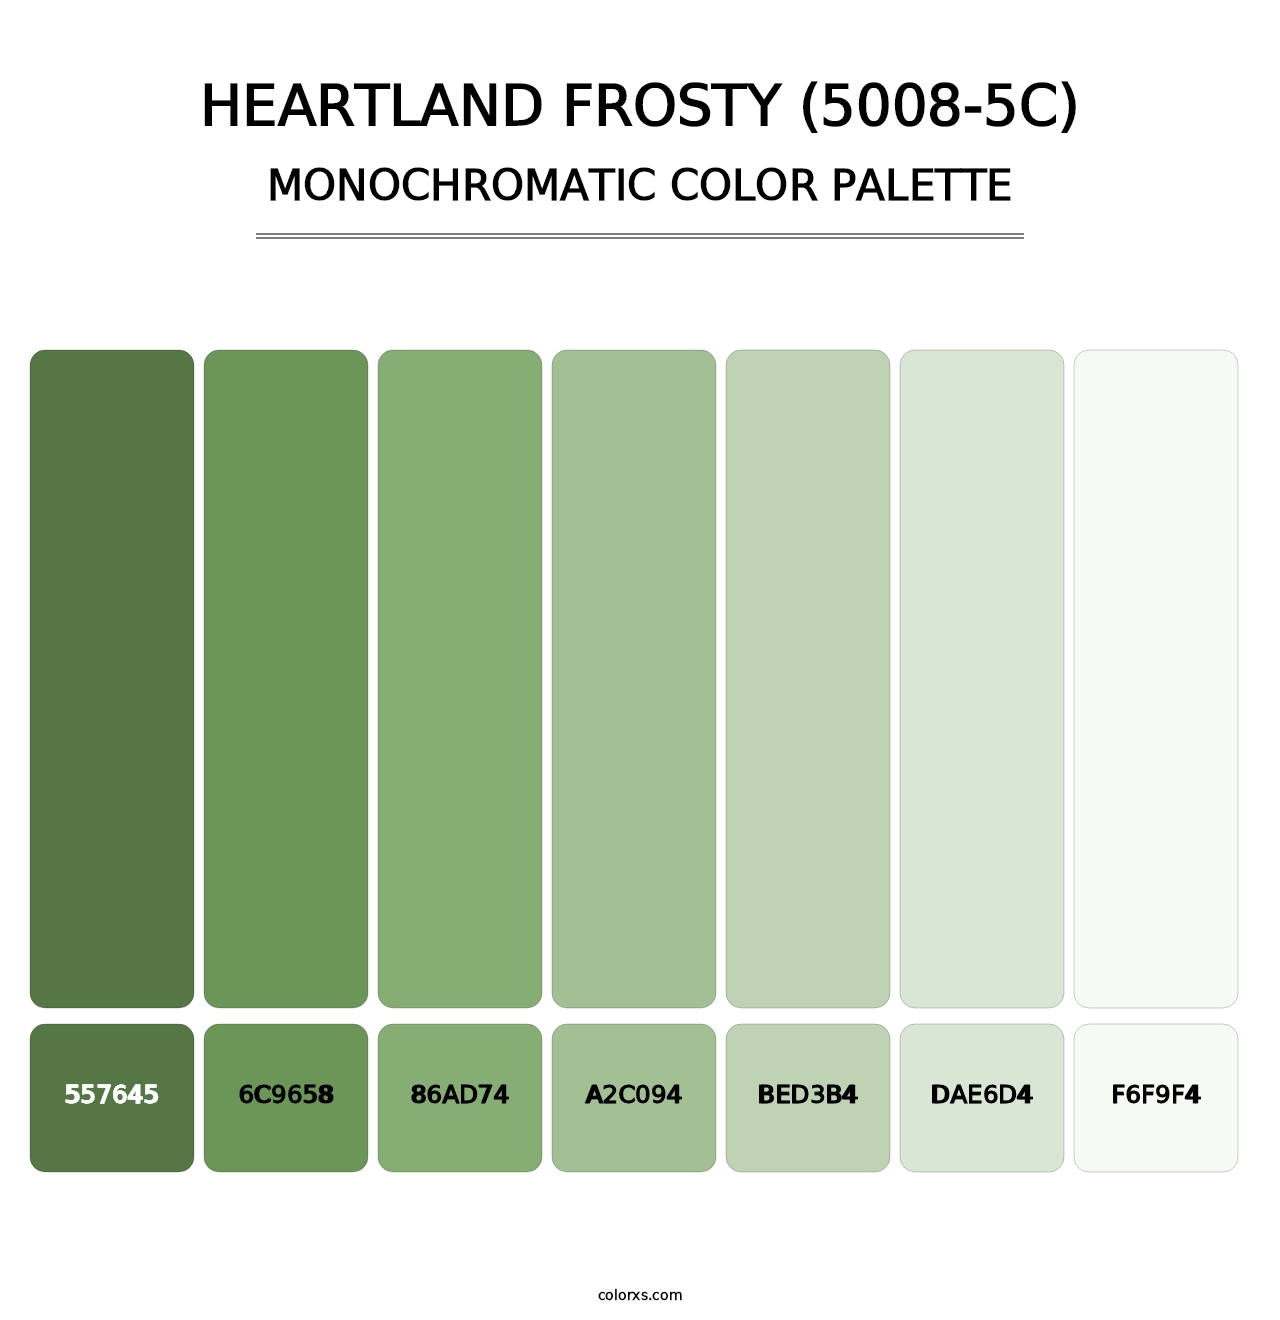 Heartland Frosty (5008-5C) - Monochromatic Color Palette